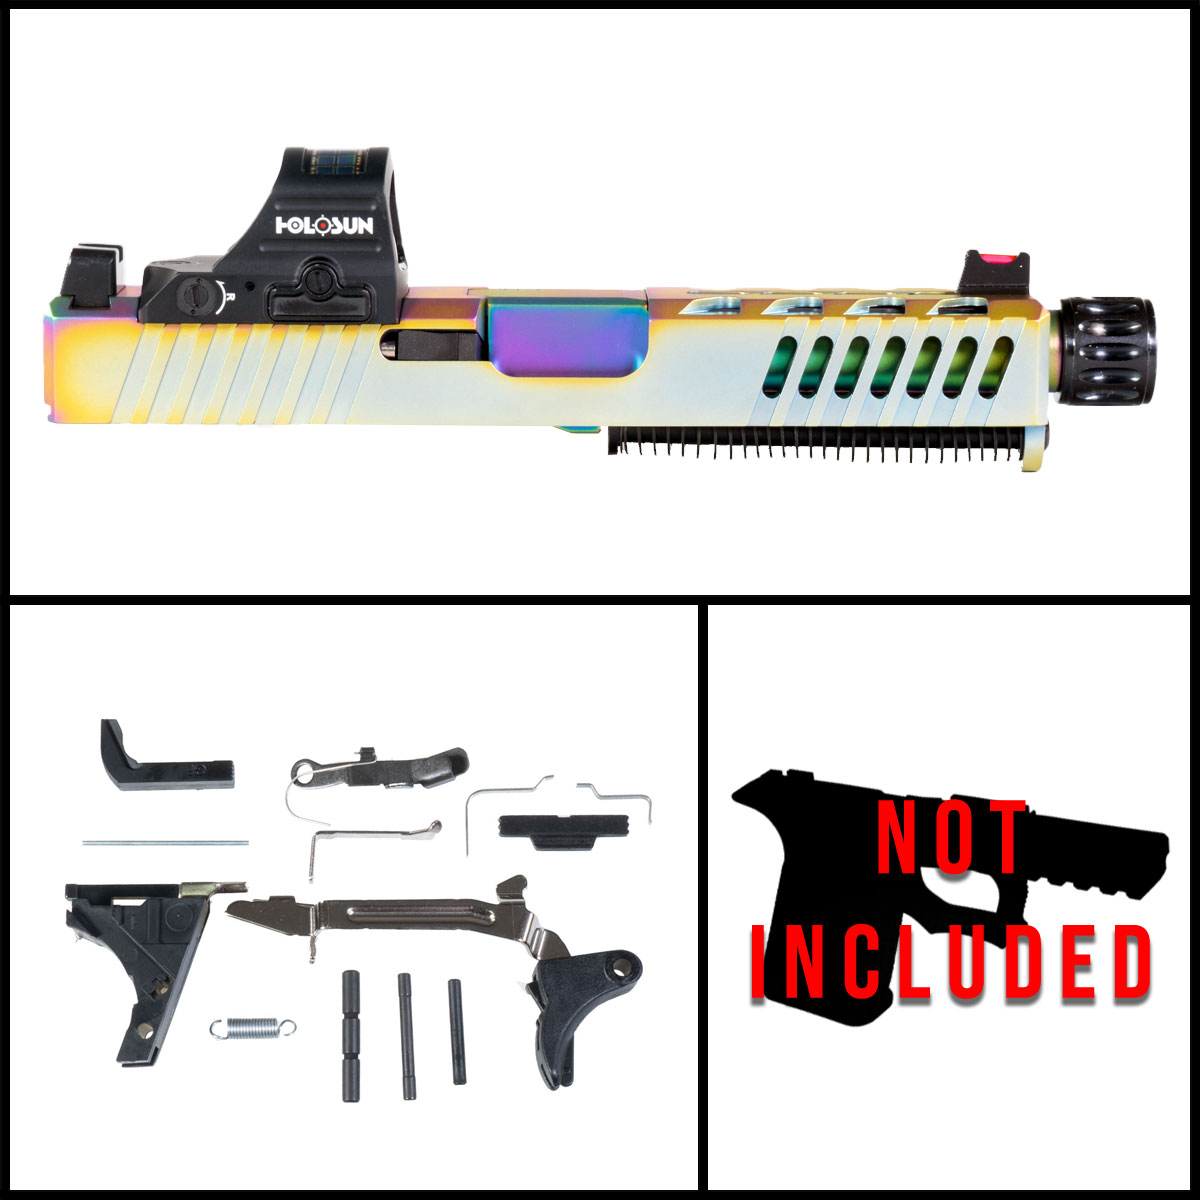 OTD 'Spectrum w/ HS507C-X2' 9mm Full Pistol Build Kits (Everything Minus Frame) - Glock 19 Gen 1-2 Compatible